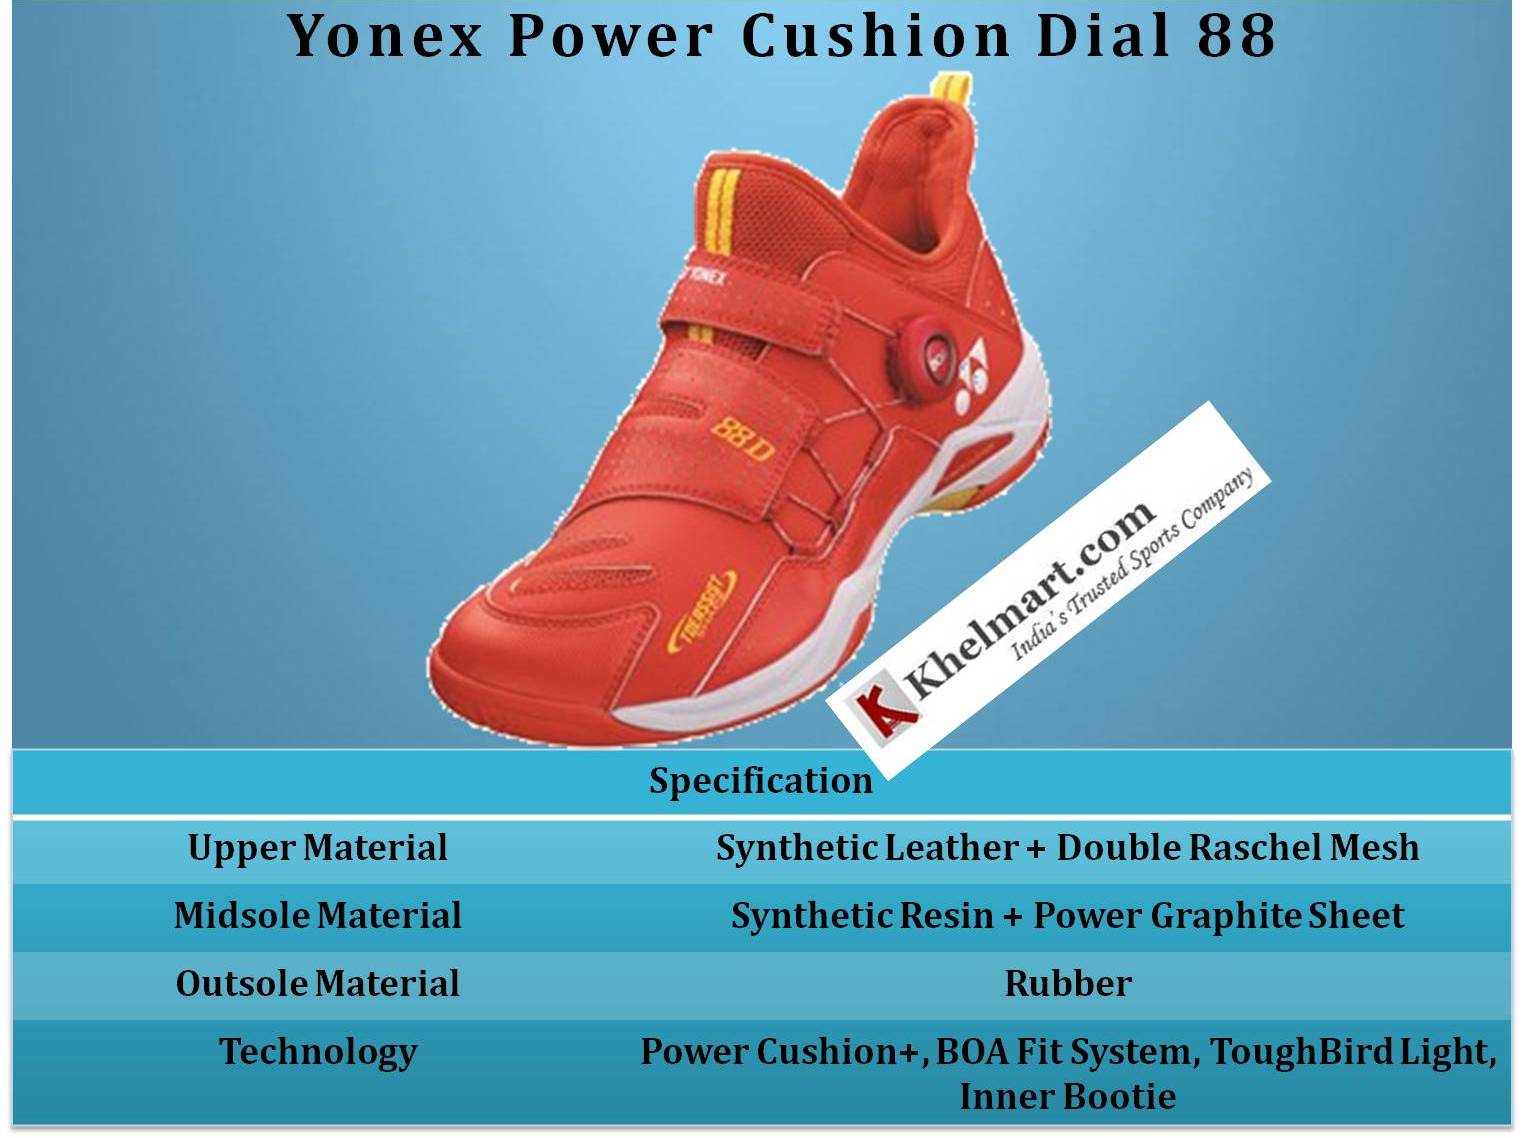 Yonex_Power_Cushion_88_Dial_Badminton_Shoes_Specification_Khelmart